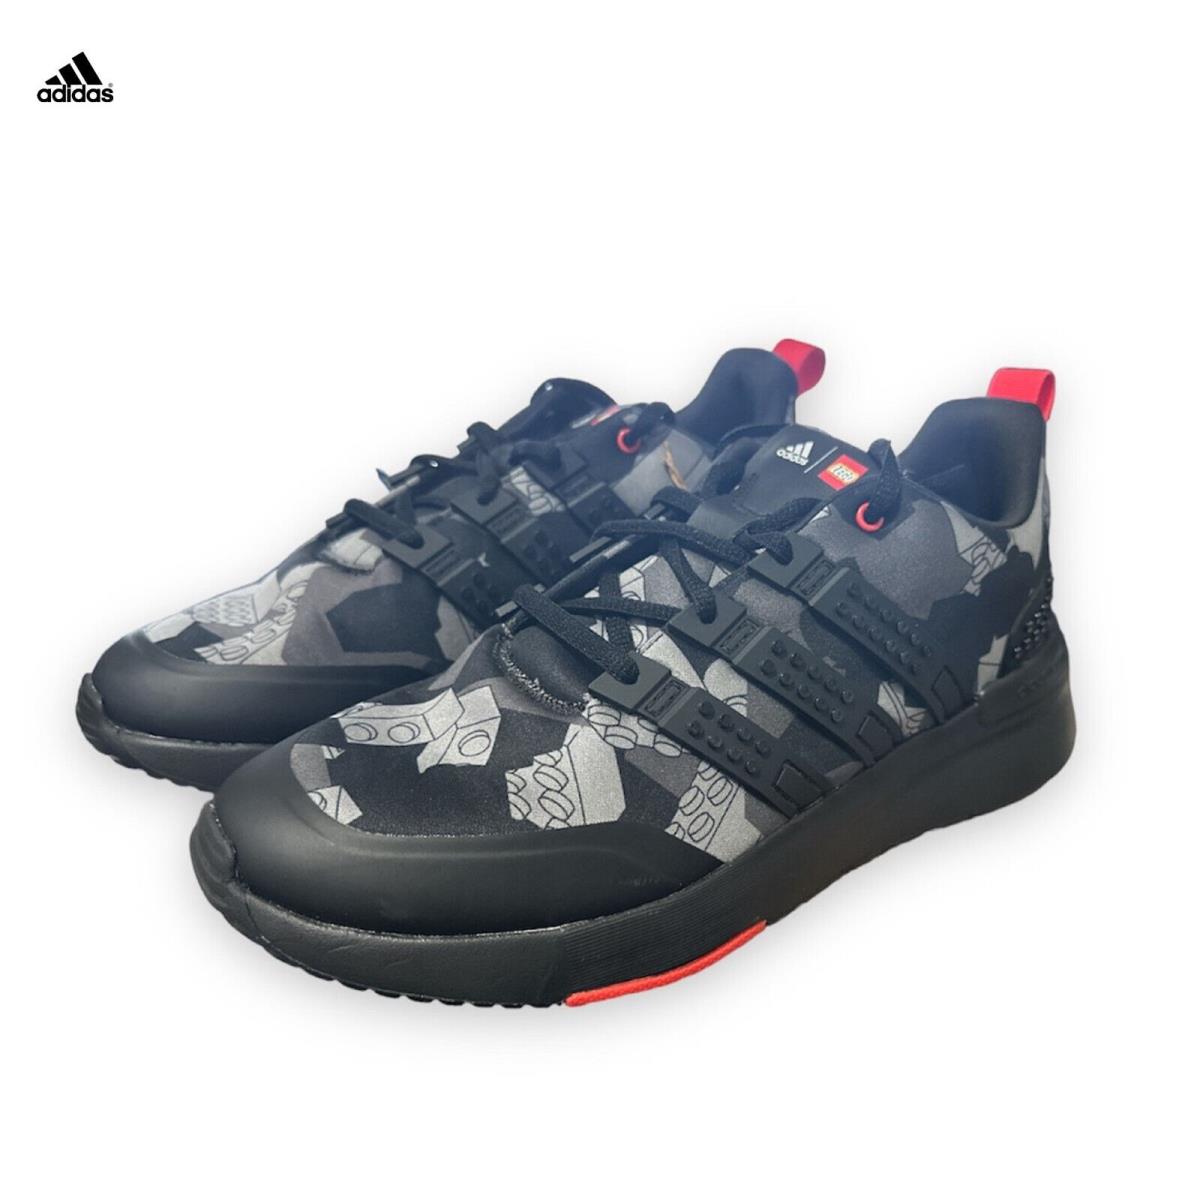 Adidas Lego Racer TR K Running Sneakers GW0919 Boys Youth Size 7 - Black